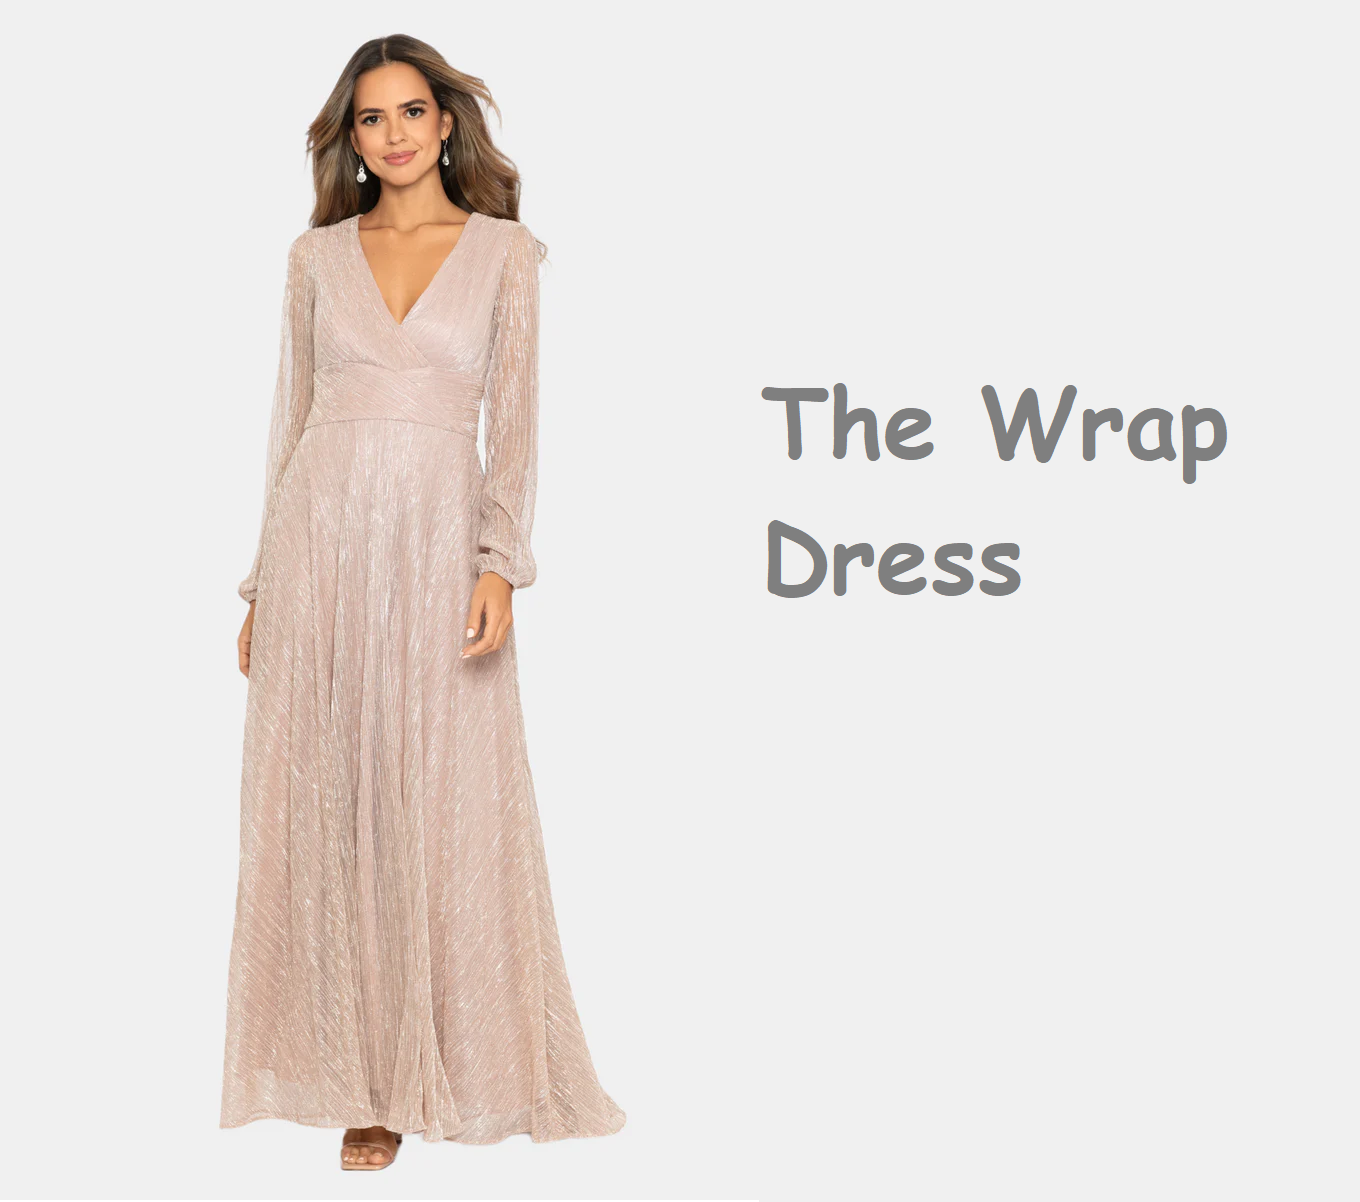 The Wrap dress